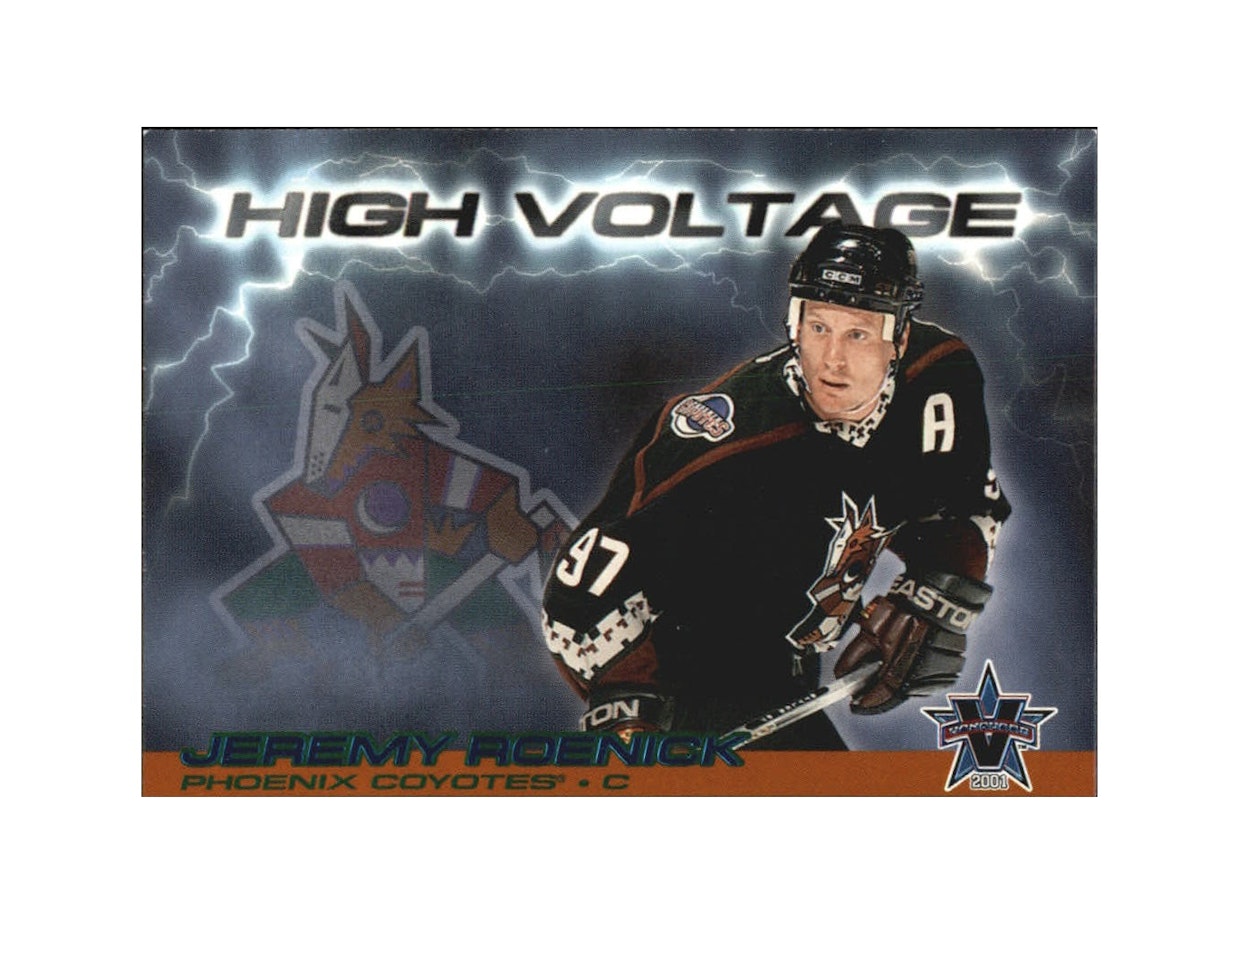 2000-01 Vanguard High Voltage #27 Jeremy Roenick (12-X170-COYOTES) (2)